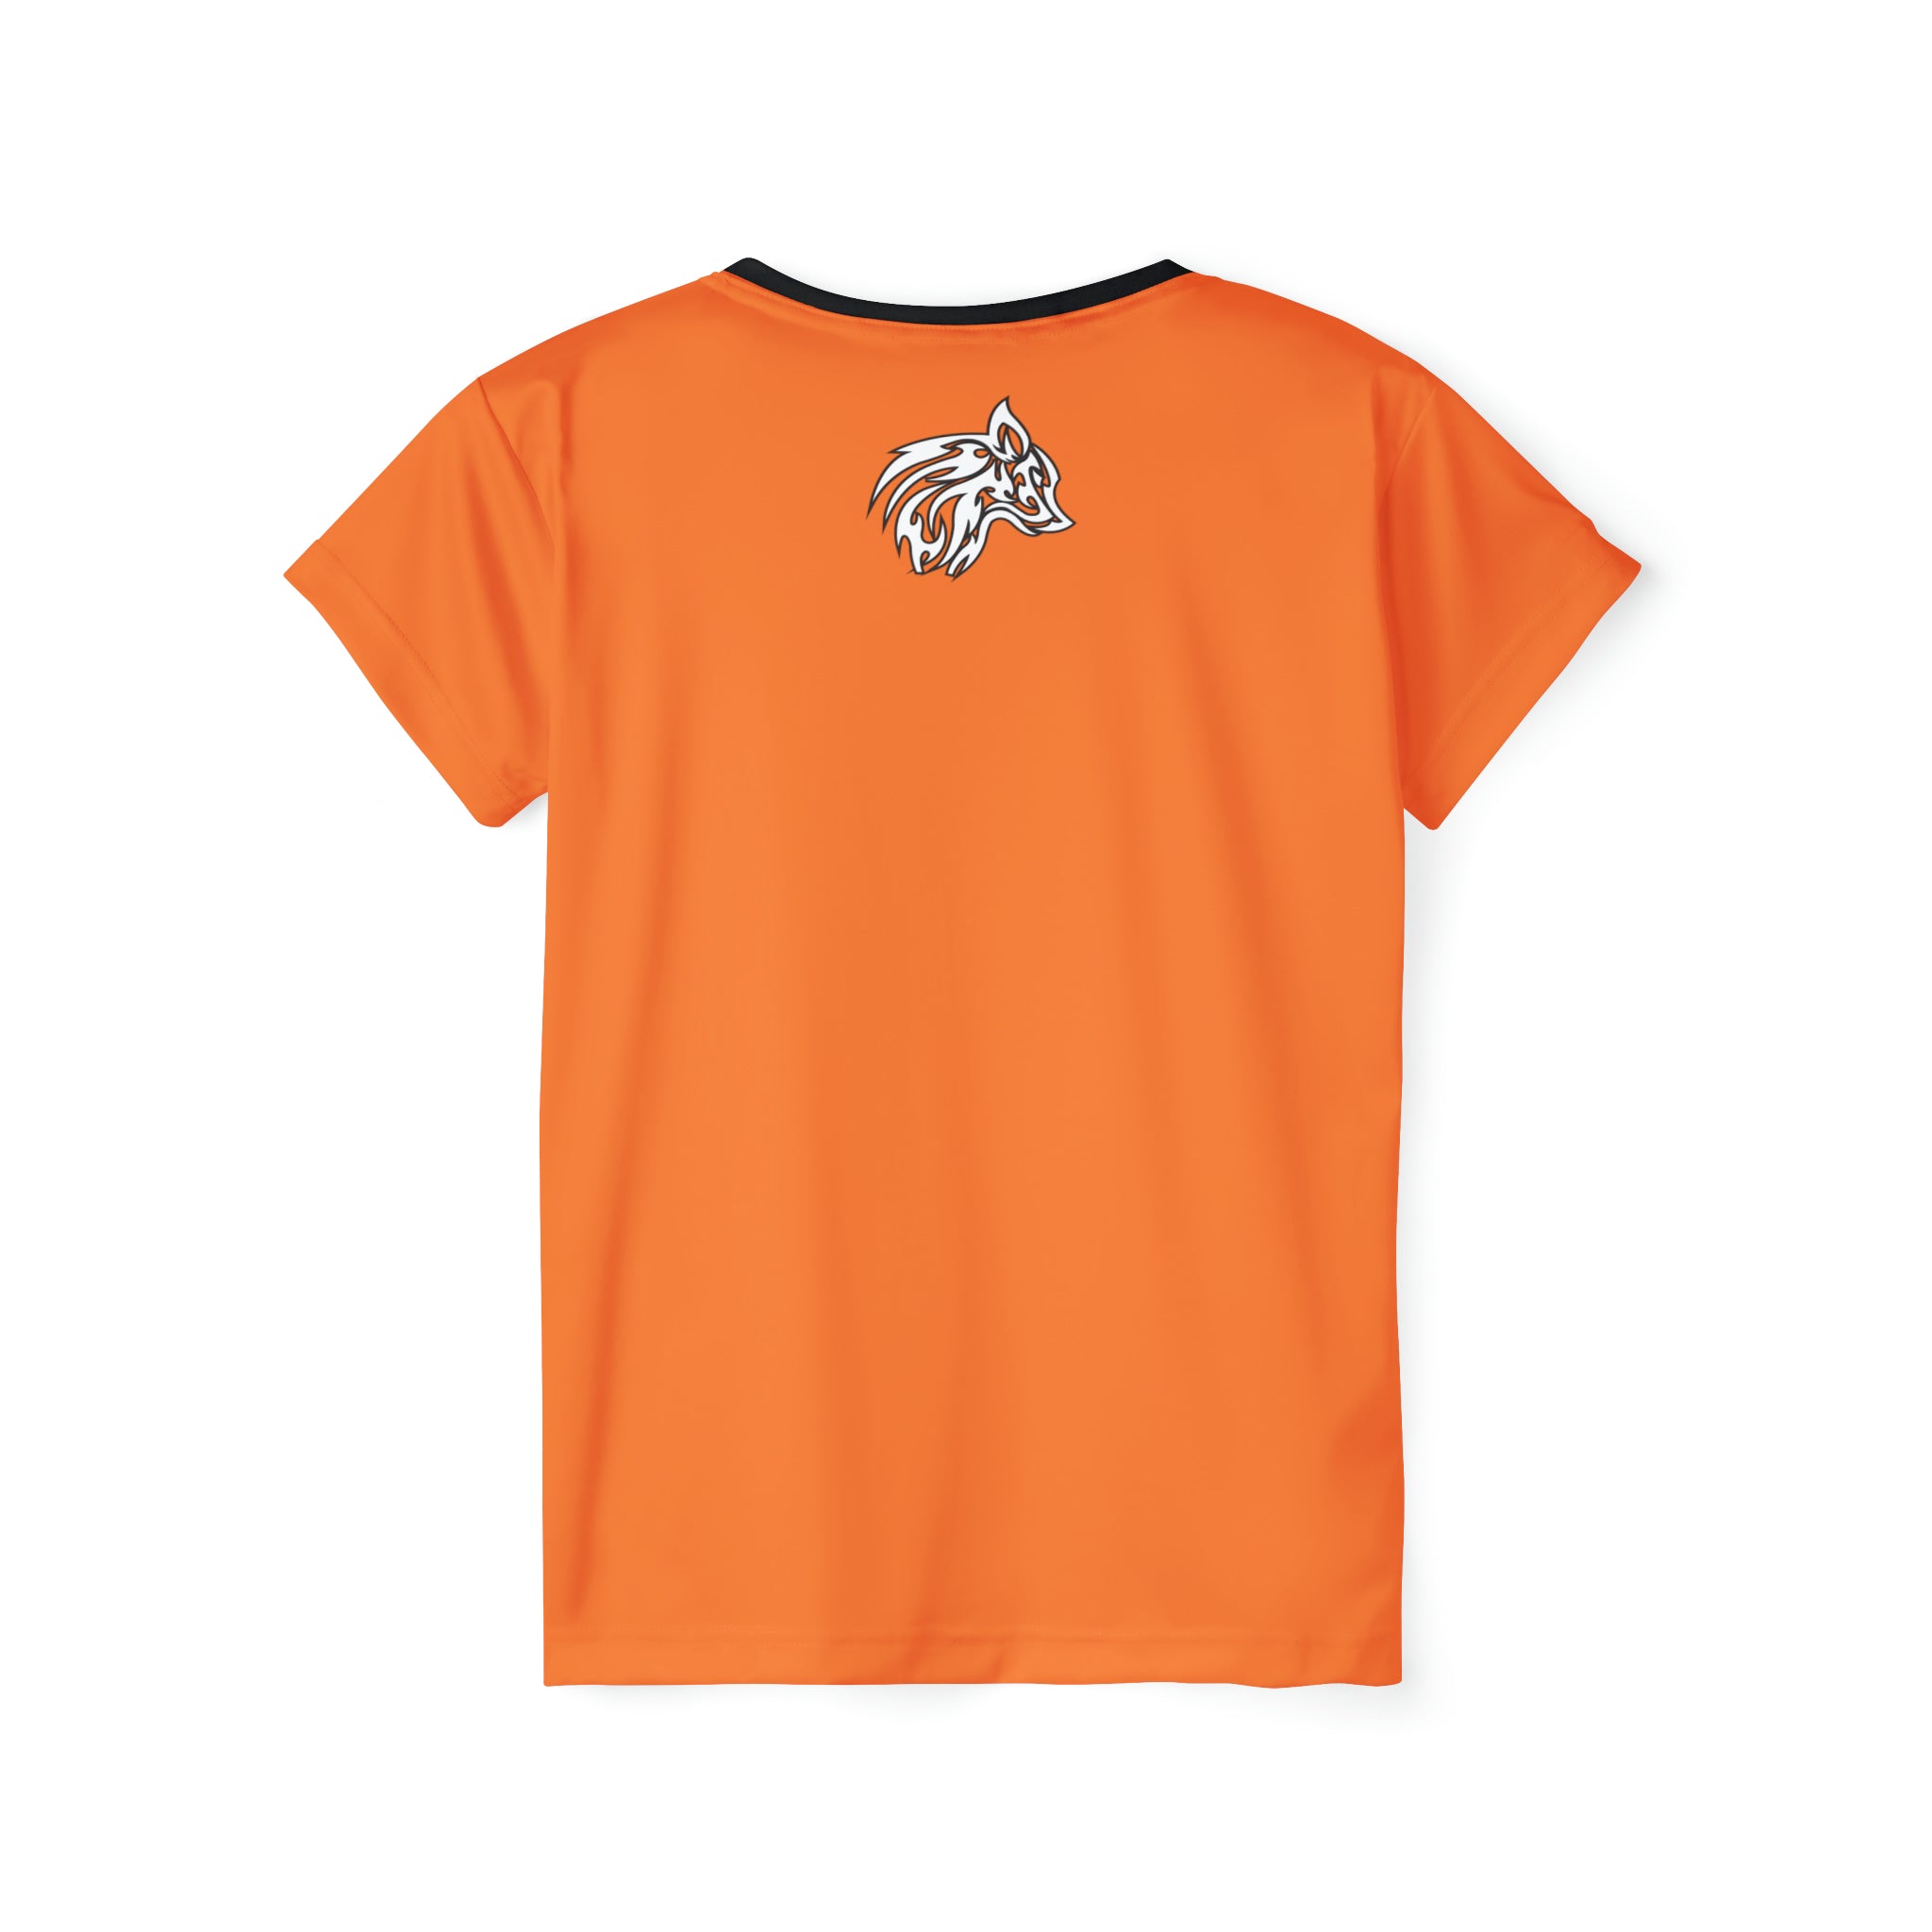 Viper Women's Performance T-shirt Orange Edition